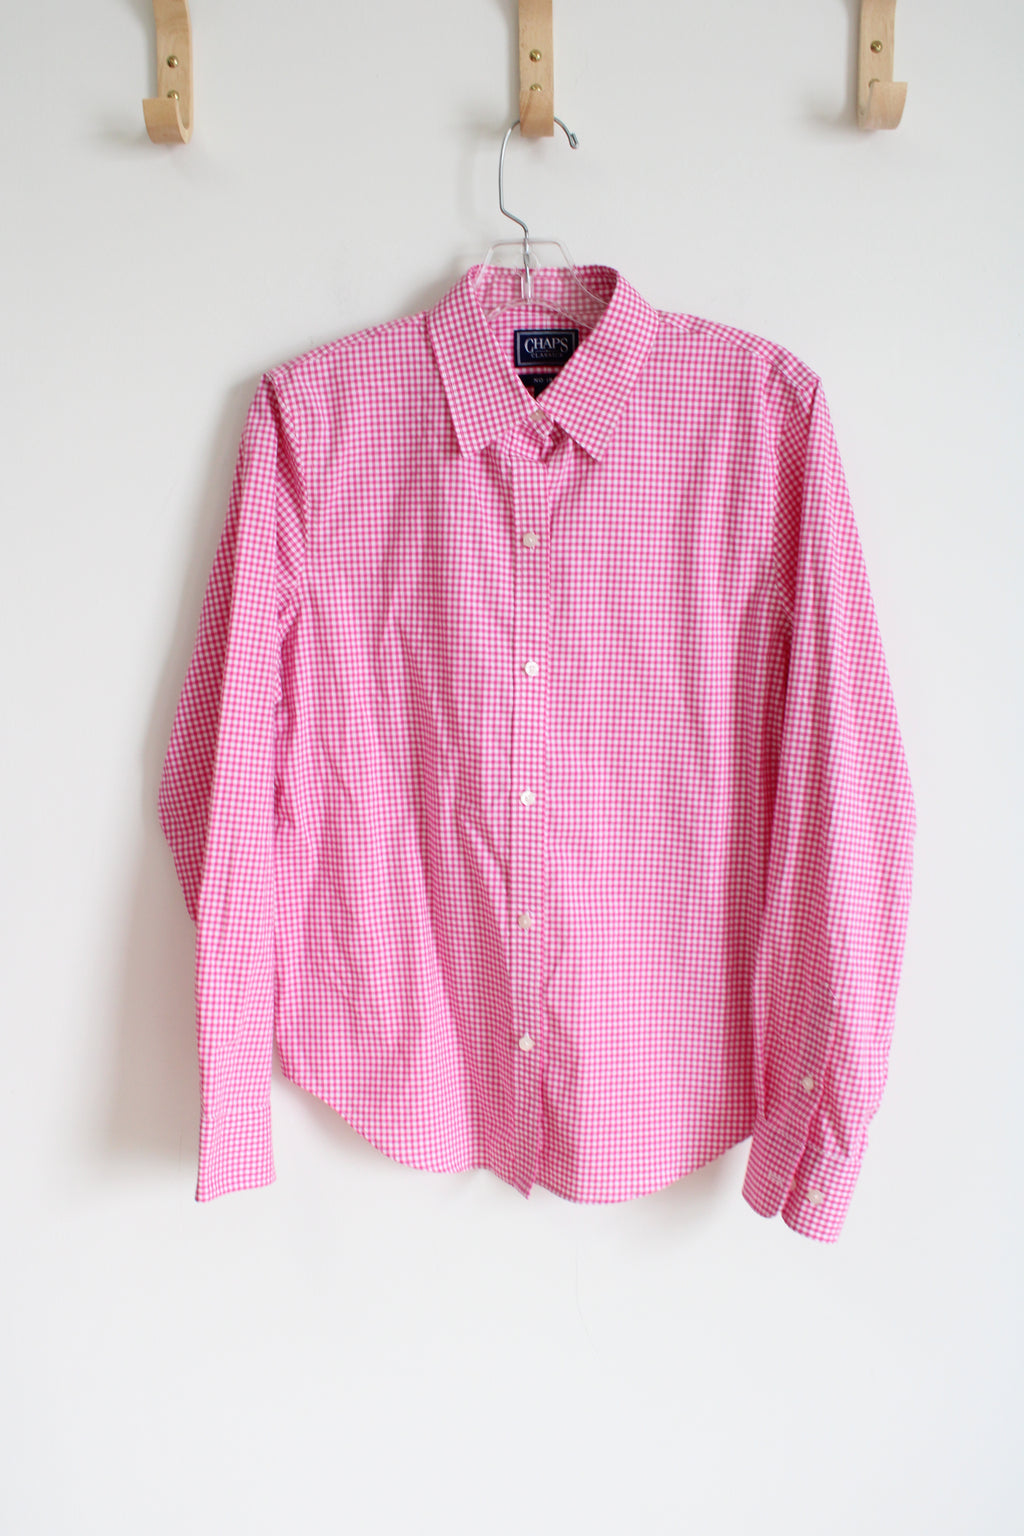 Chaps Classics No Iron Pink Gingham Button Down Shirt | M